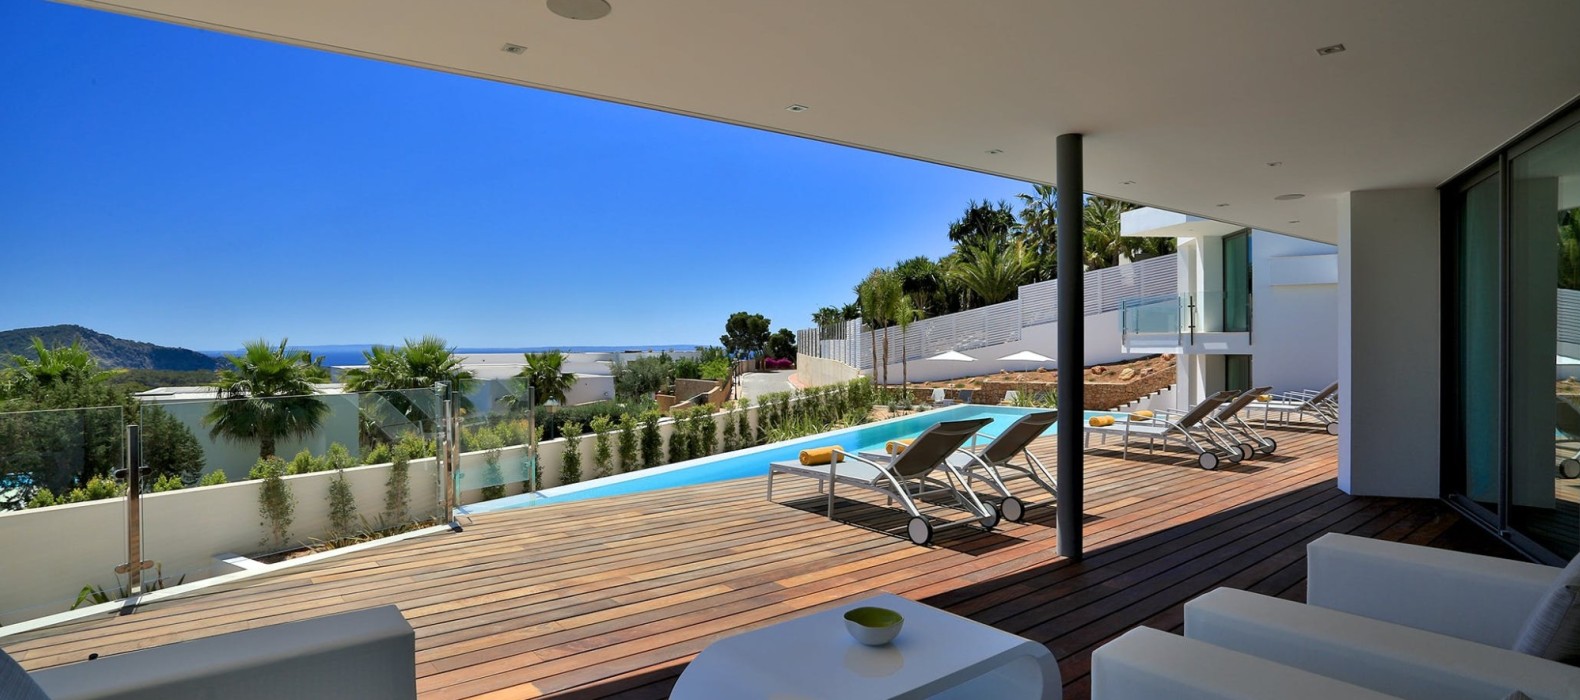 Lounge area of Villa Amaya in Ibiza